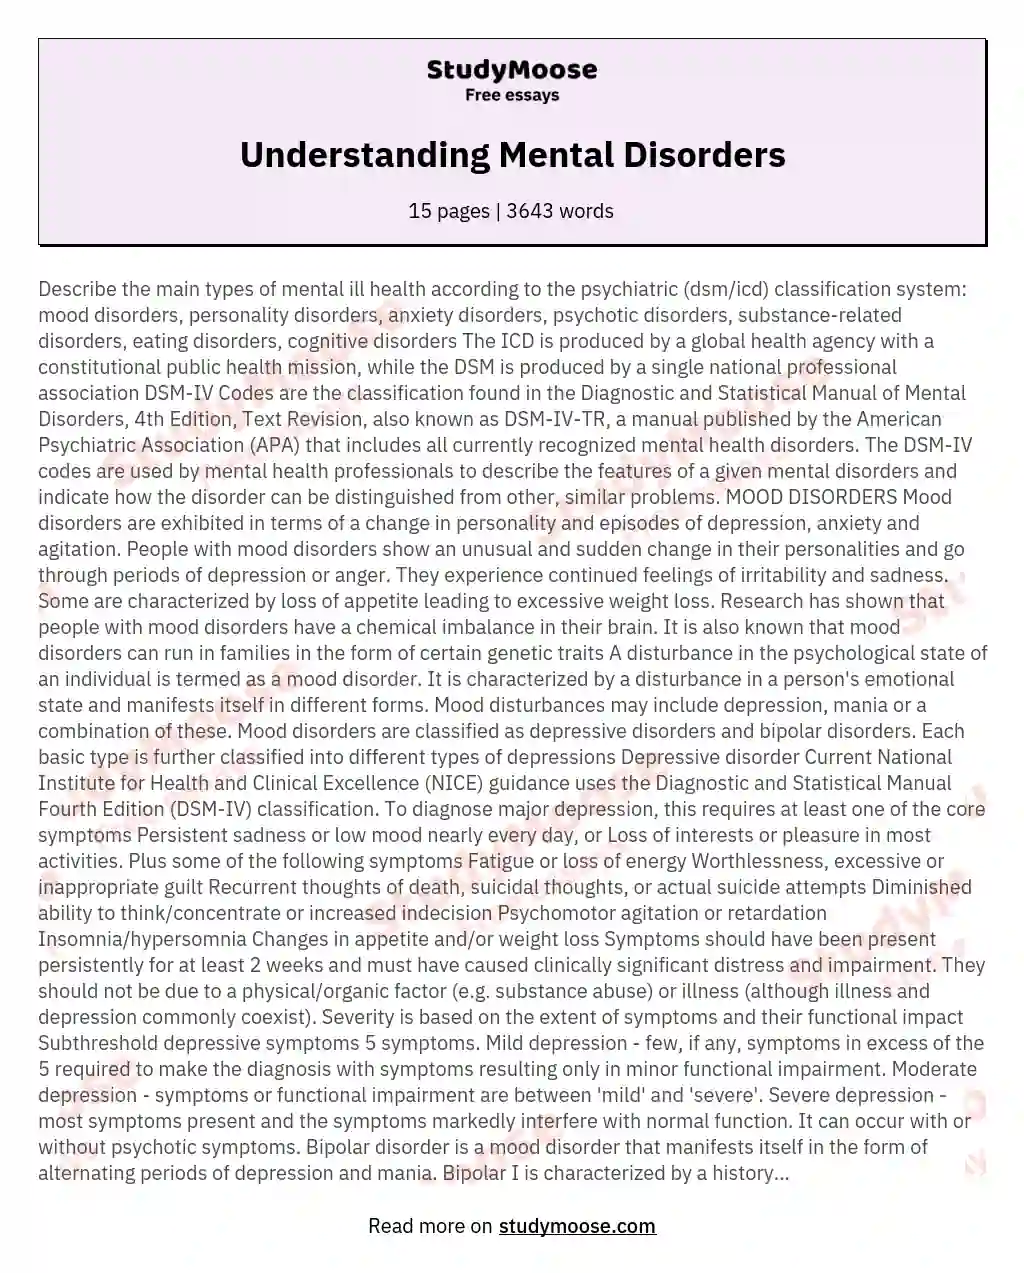 Understanding Mental Disorders essay